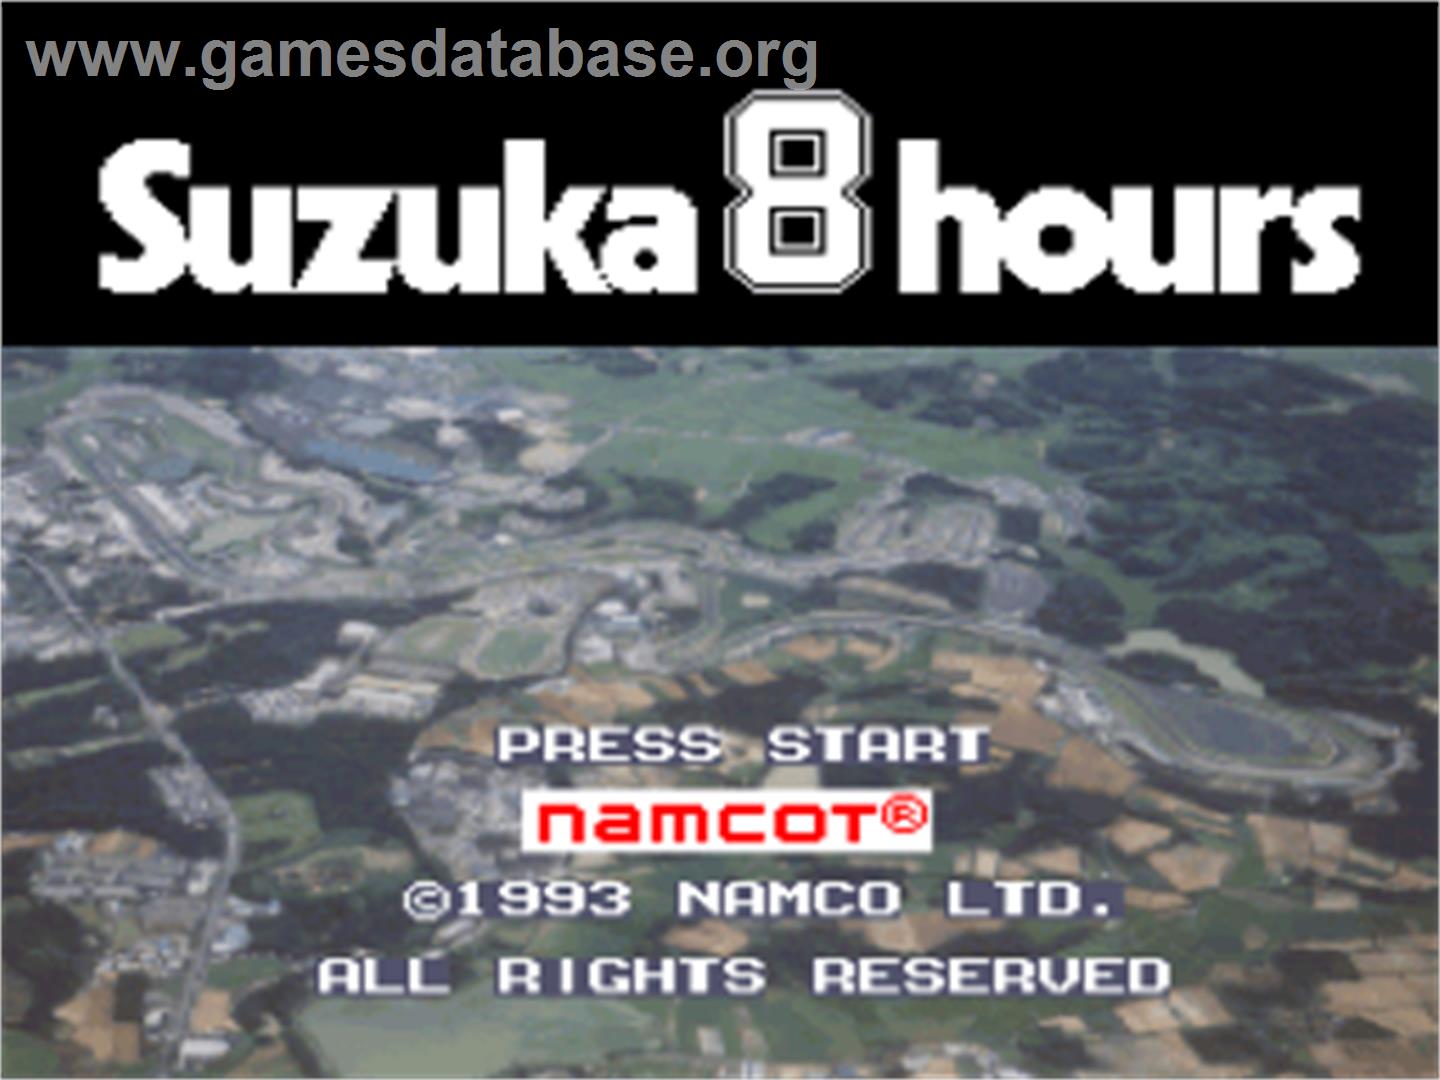 Suzuka 8 Hours - Nintendo SNES - Artwork - Title Screen